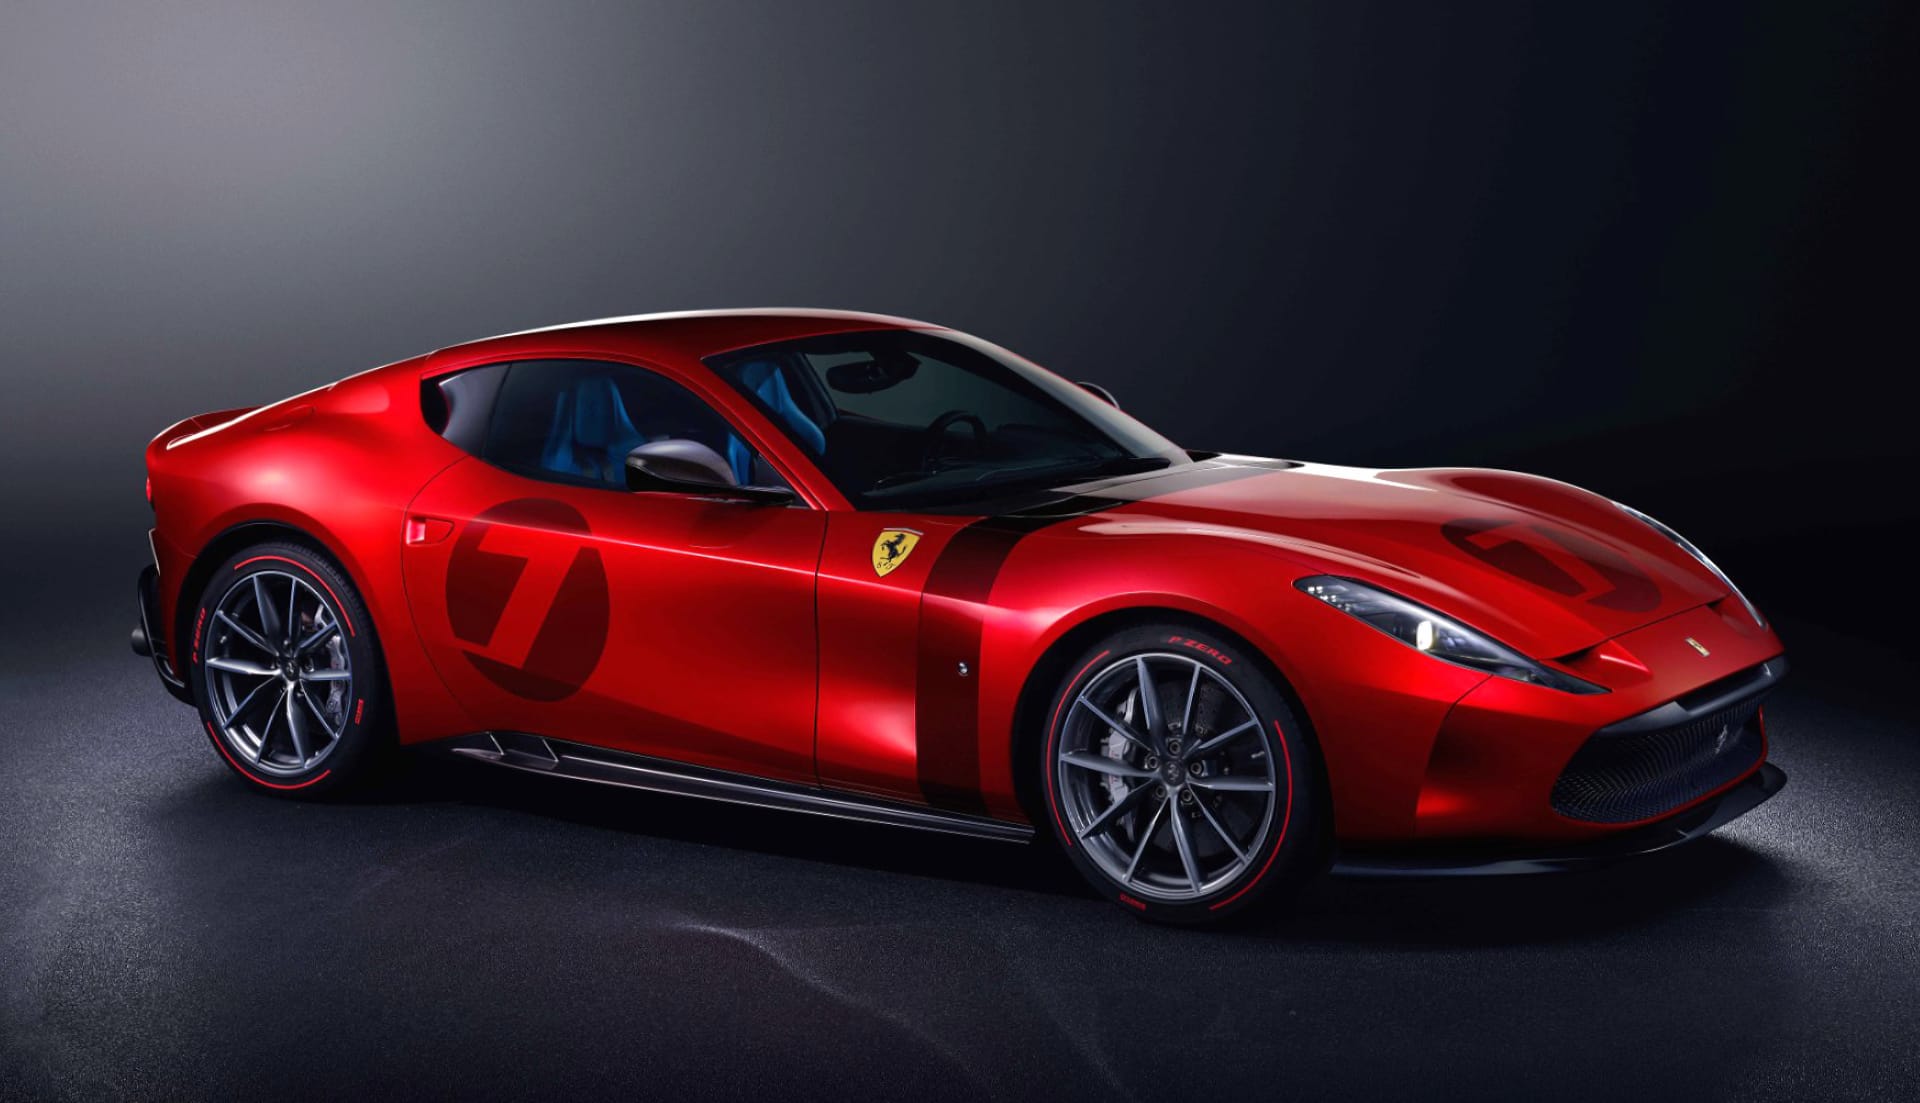 Ferrari Omologata at 320 x 480 iPhone size wallpapers HD quality